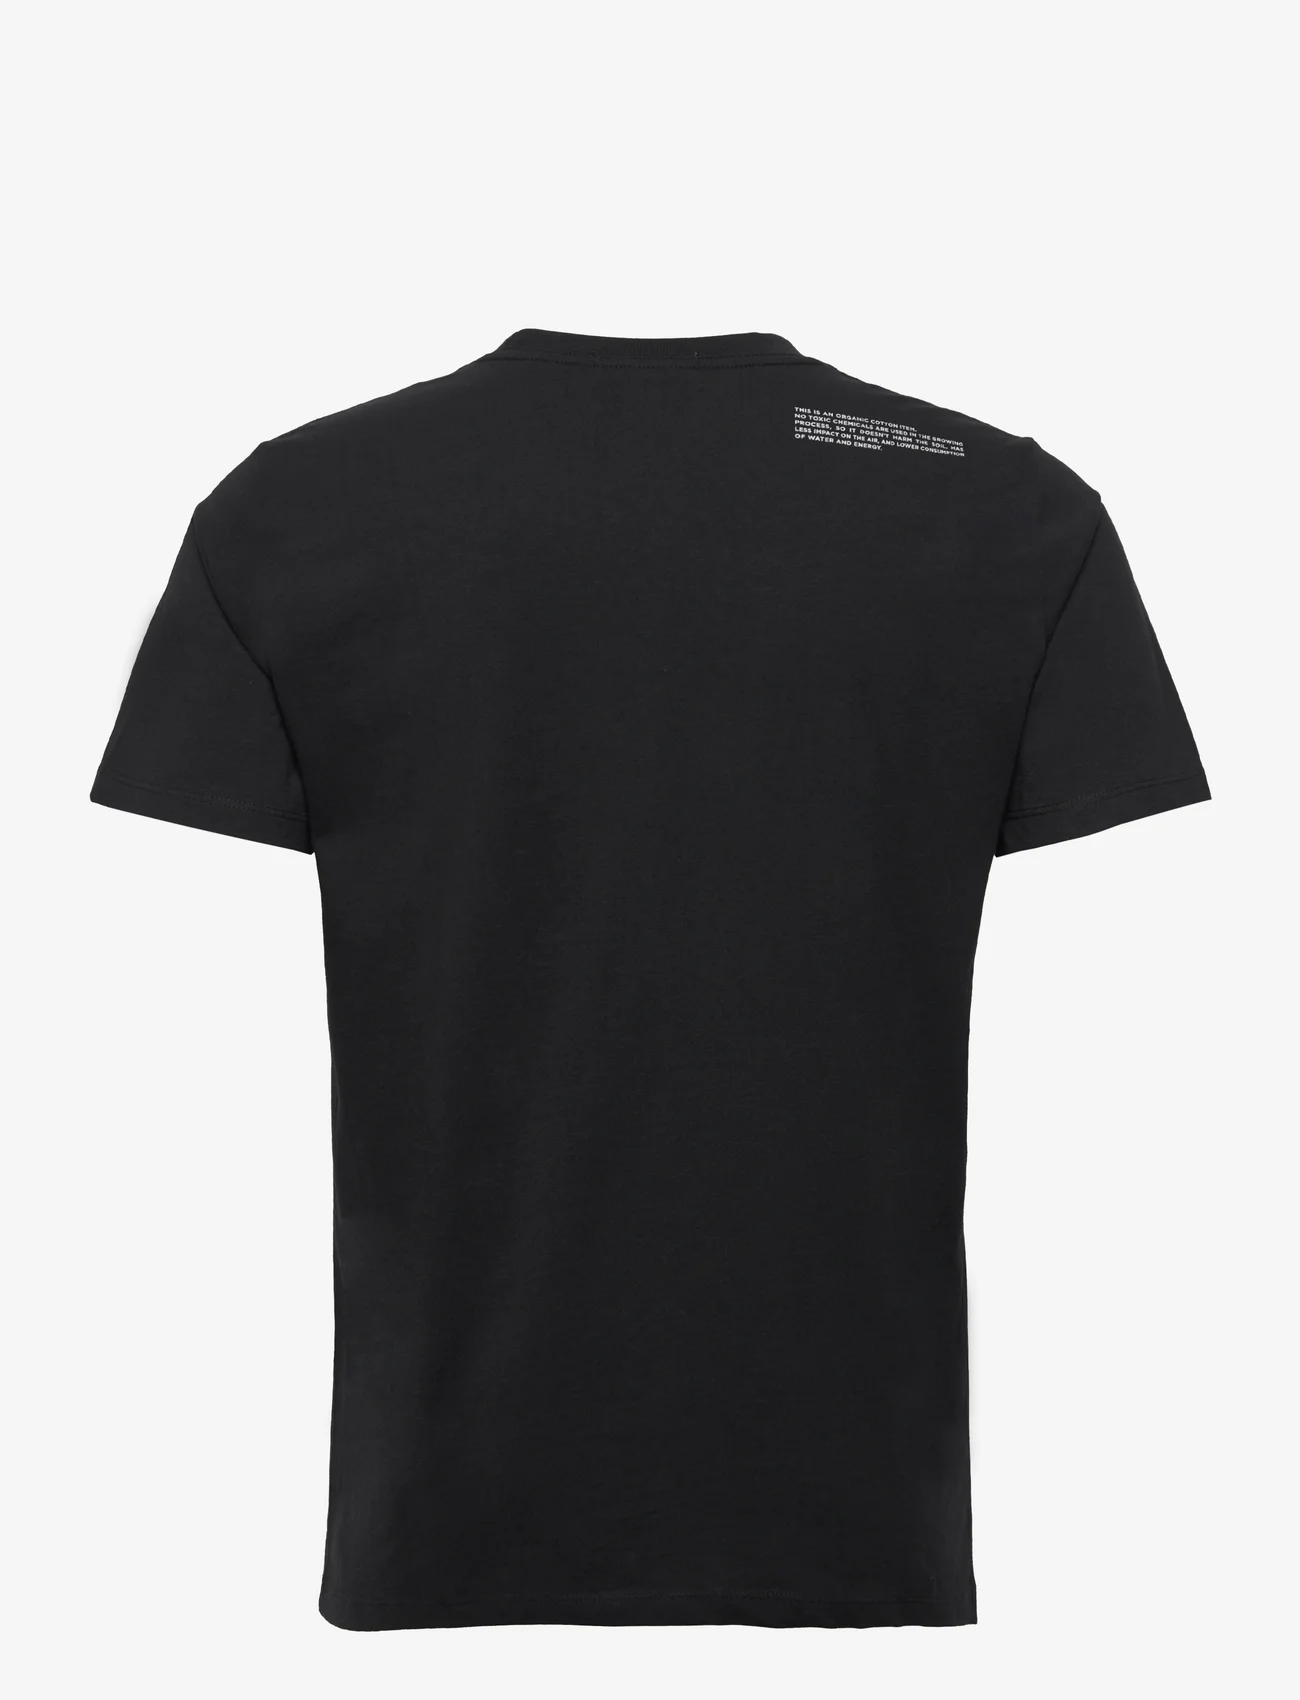 Replay - T-Shirt SECOND LIFE - basis-t-skjorter - black - 1